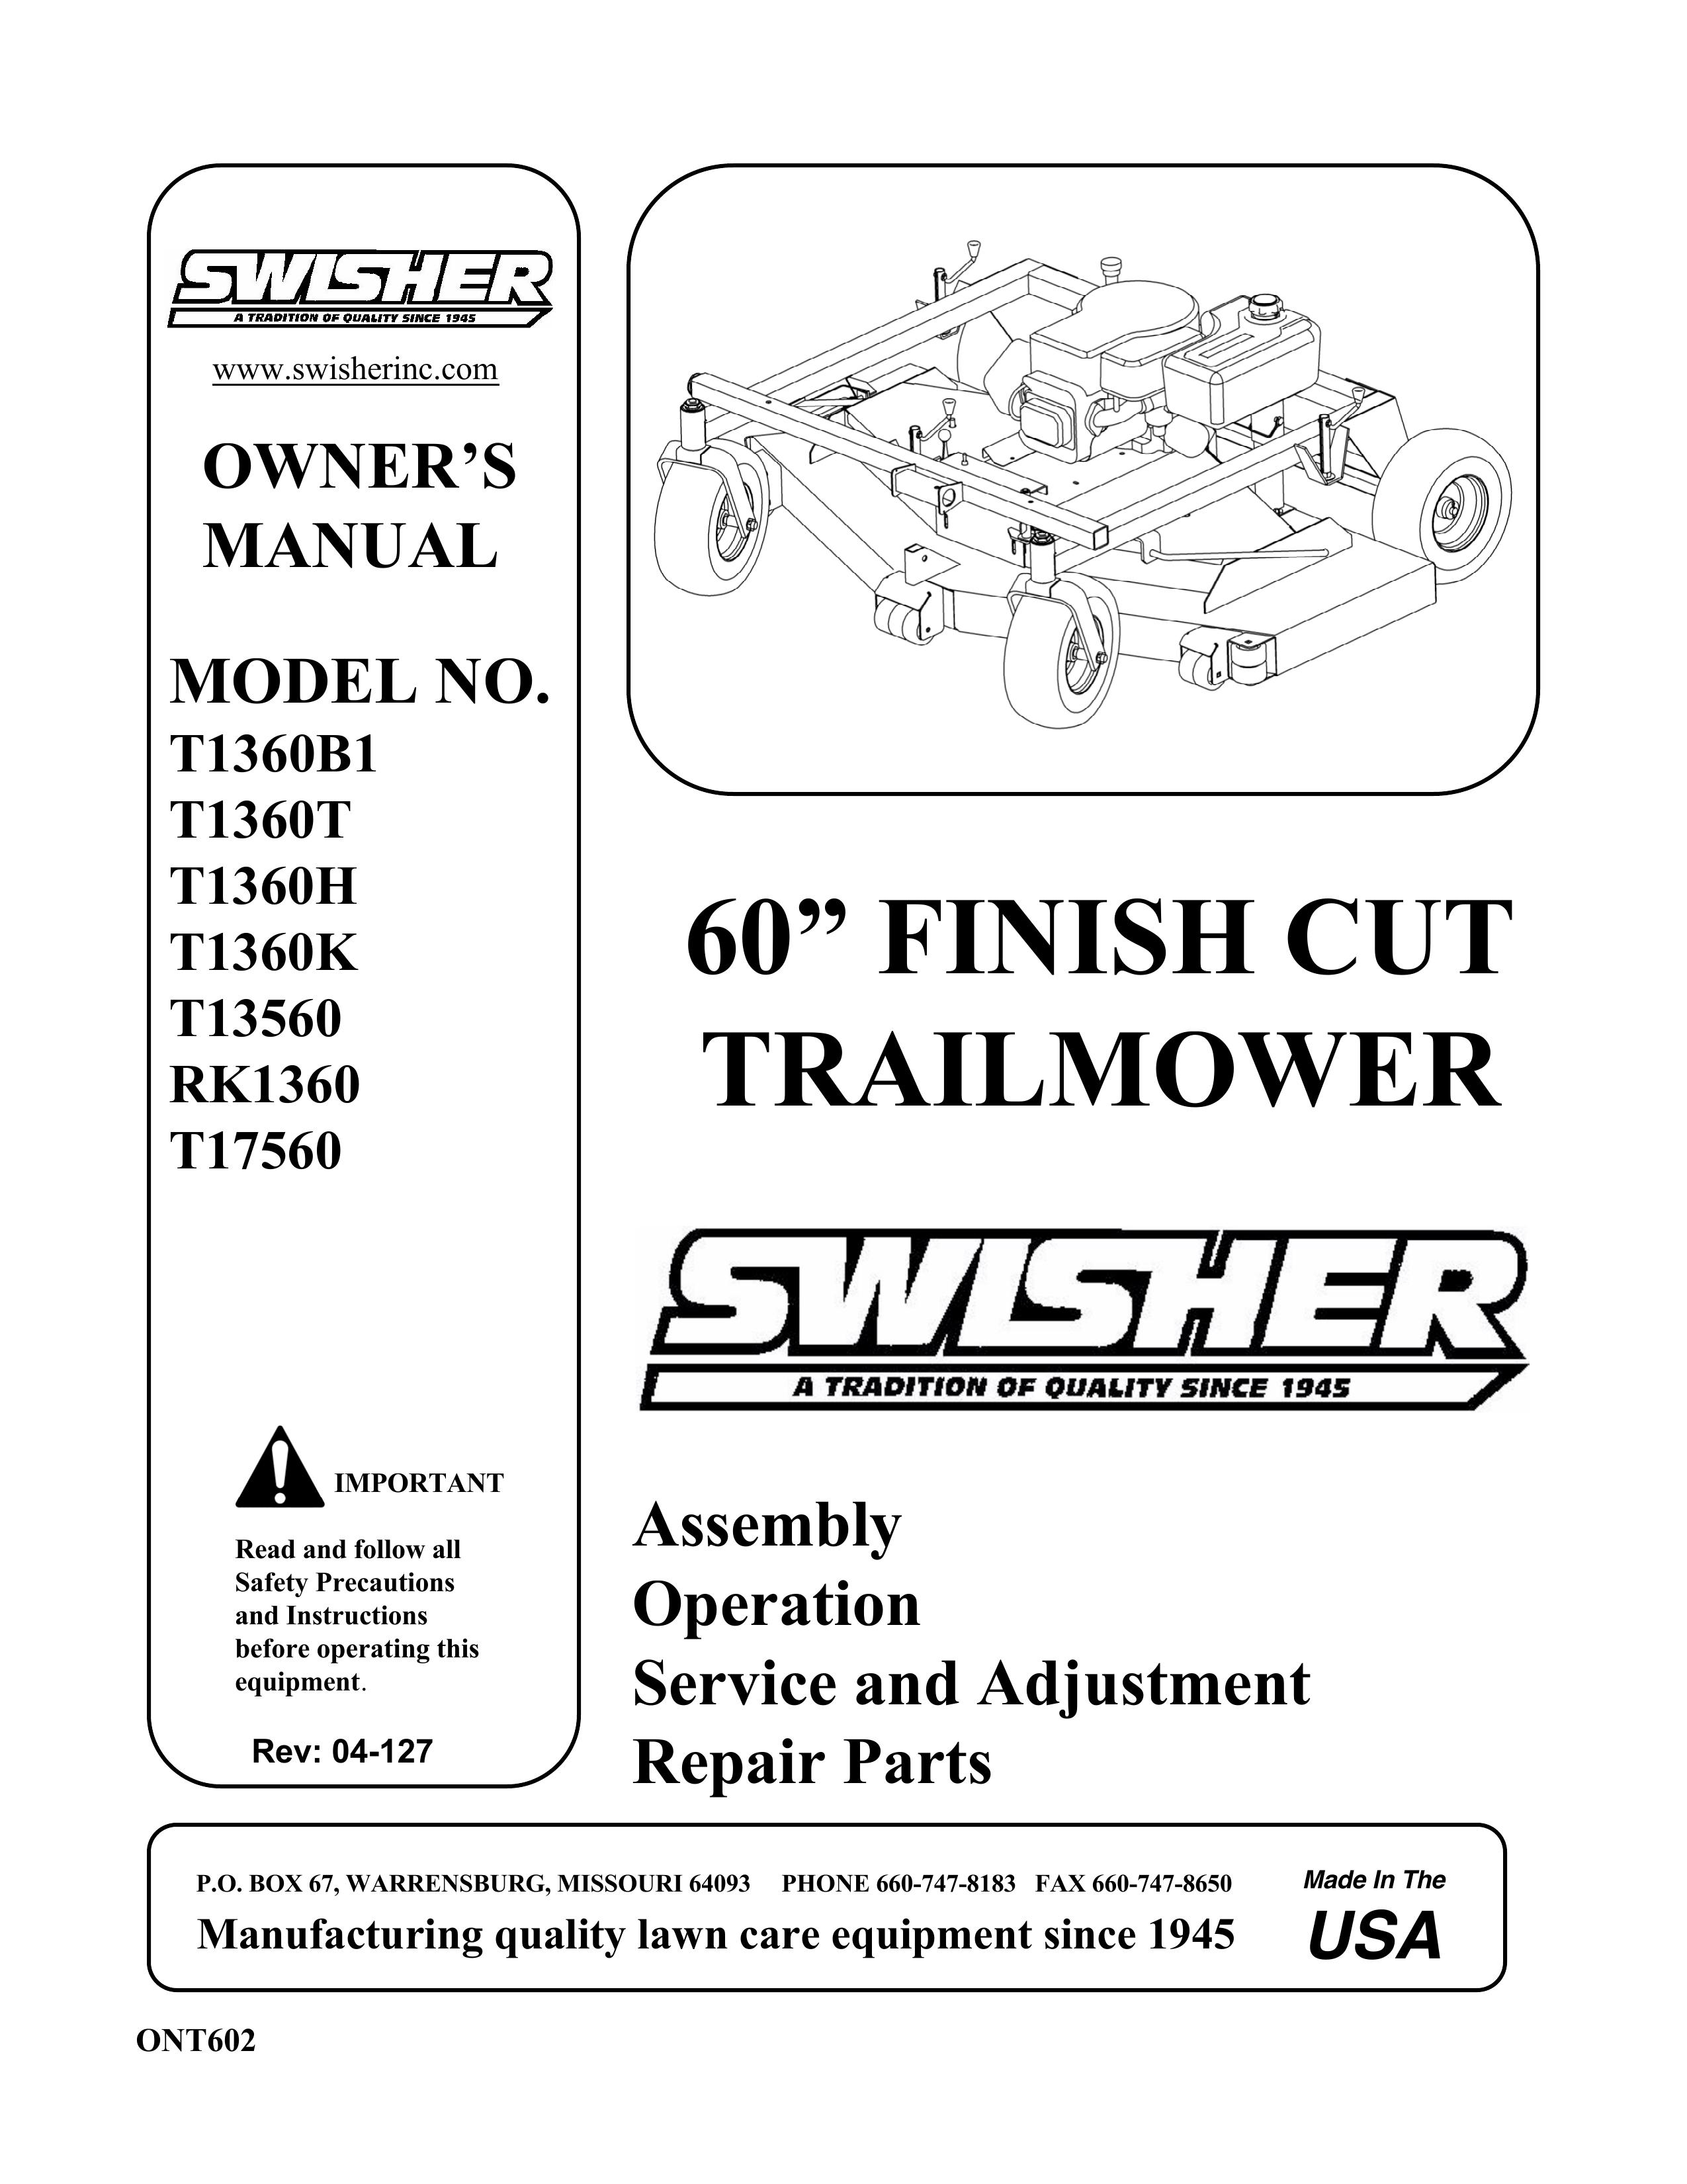 Swisher RK1360 Lawn Mower User Manual